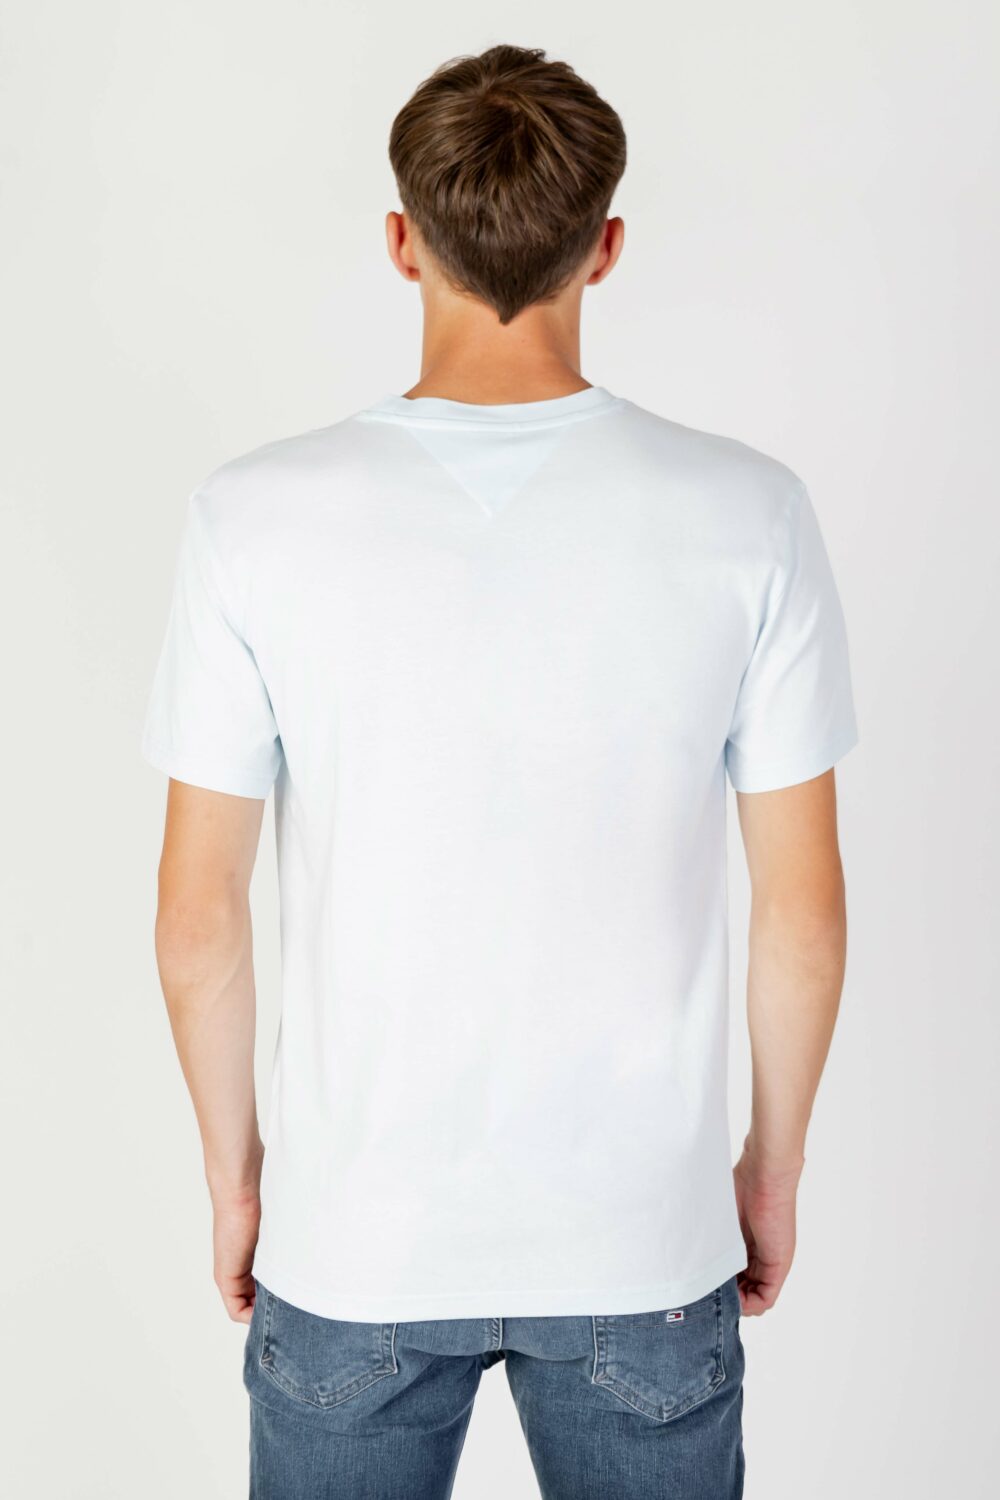 T-shirt Tommy Hilfiger Jeans TJM CLSC SMALL TEXT Celeste - Foto 4